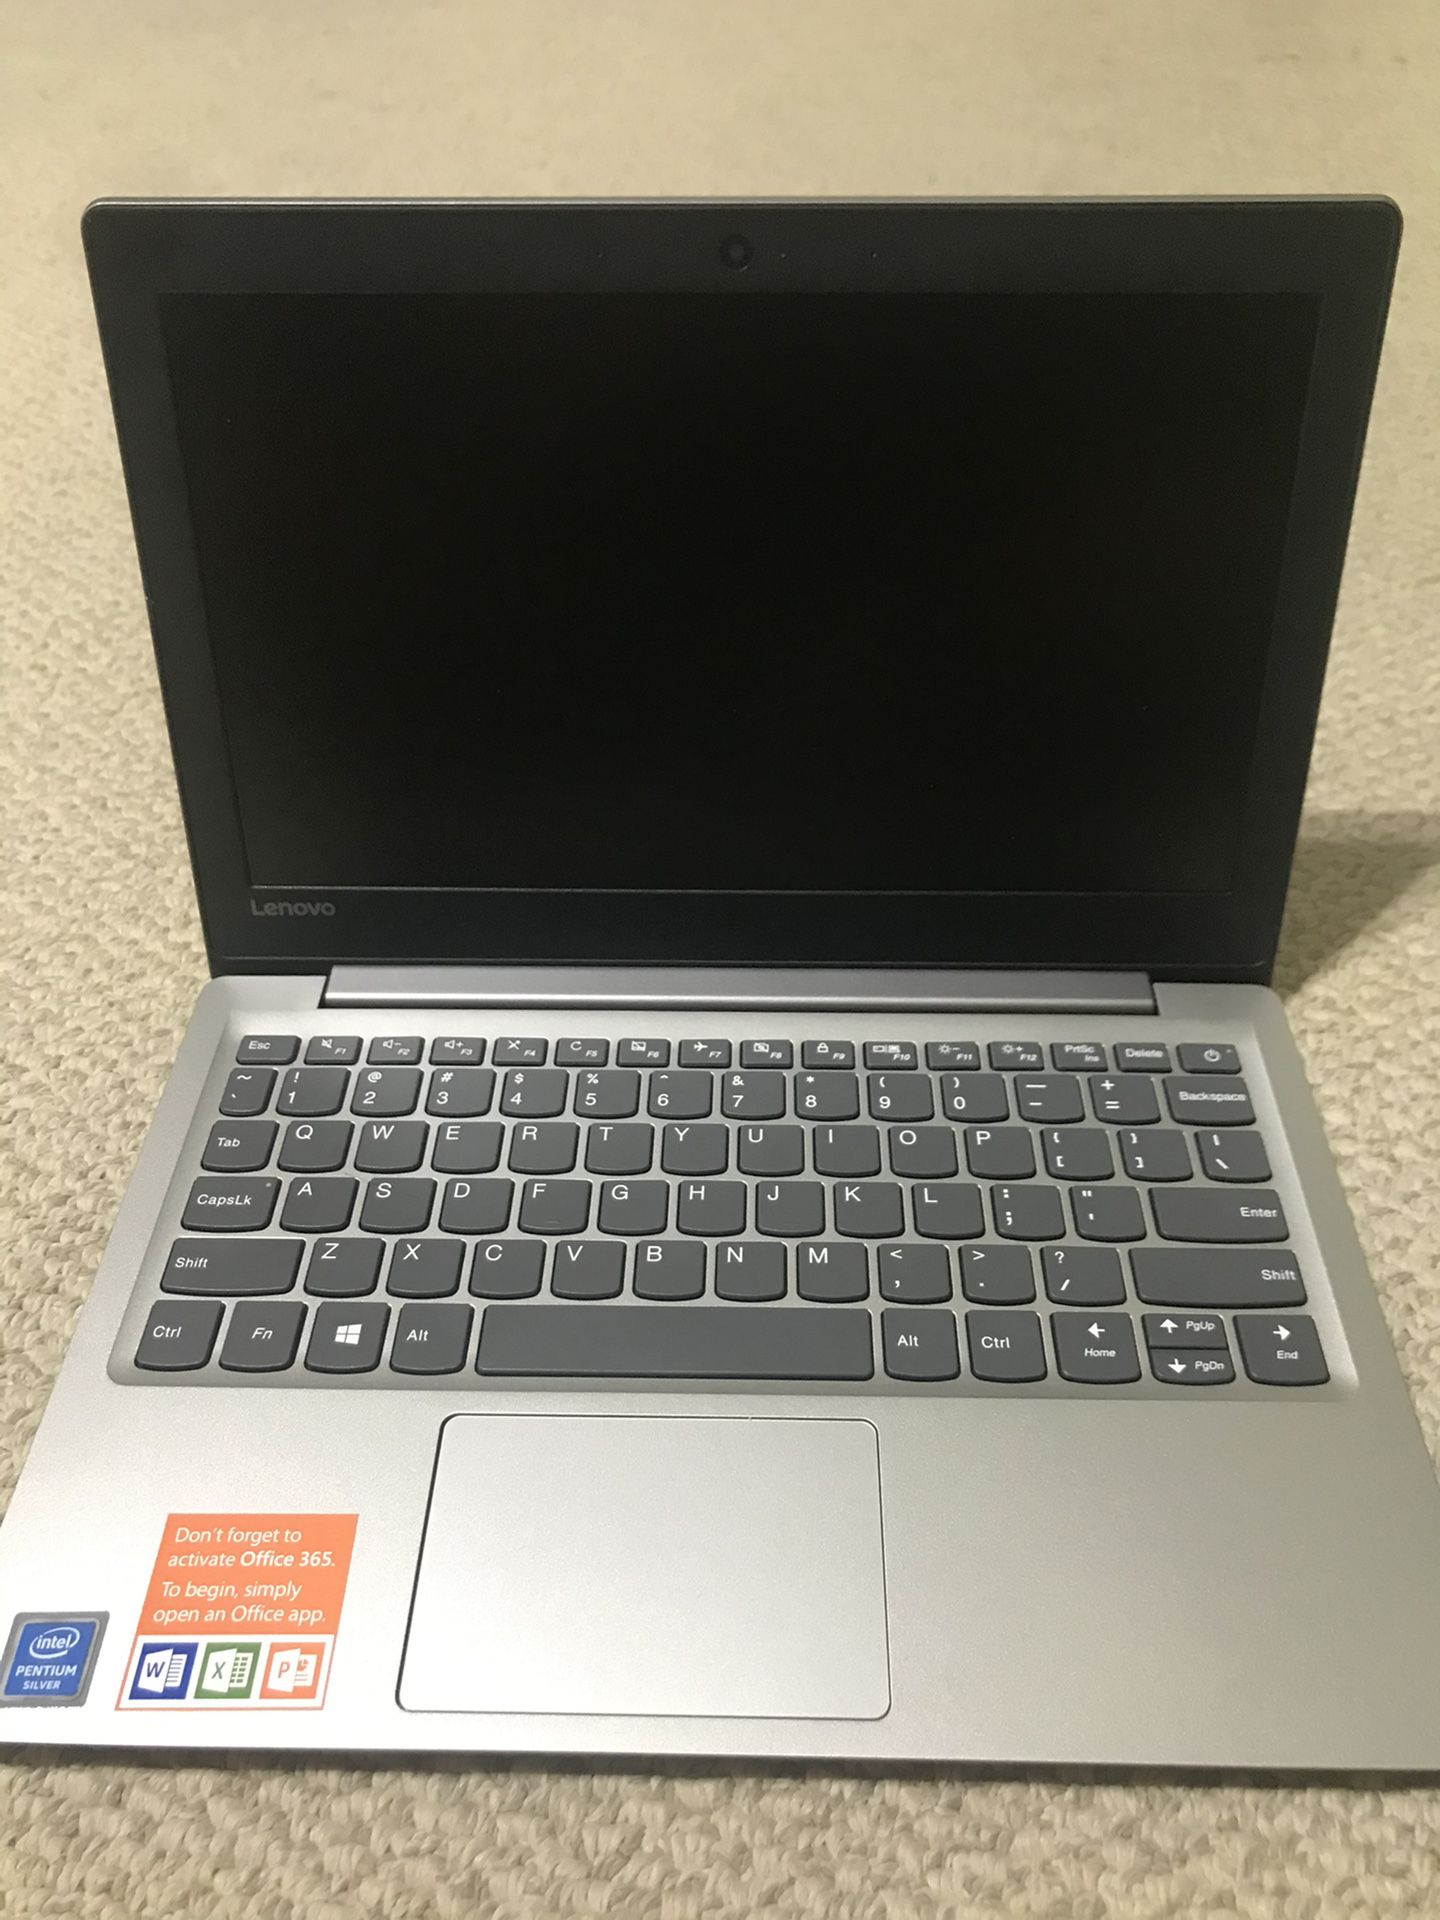 Lenovo Ideapad 130s-11igm 11.6” Laptop